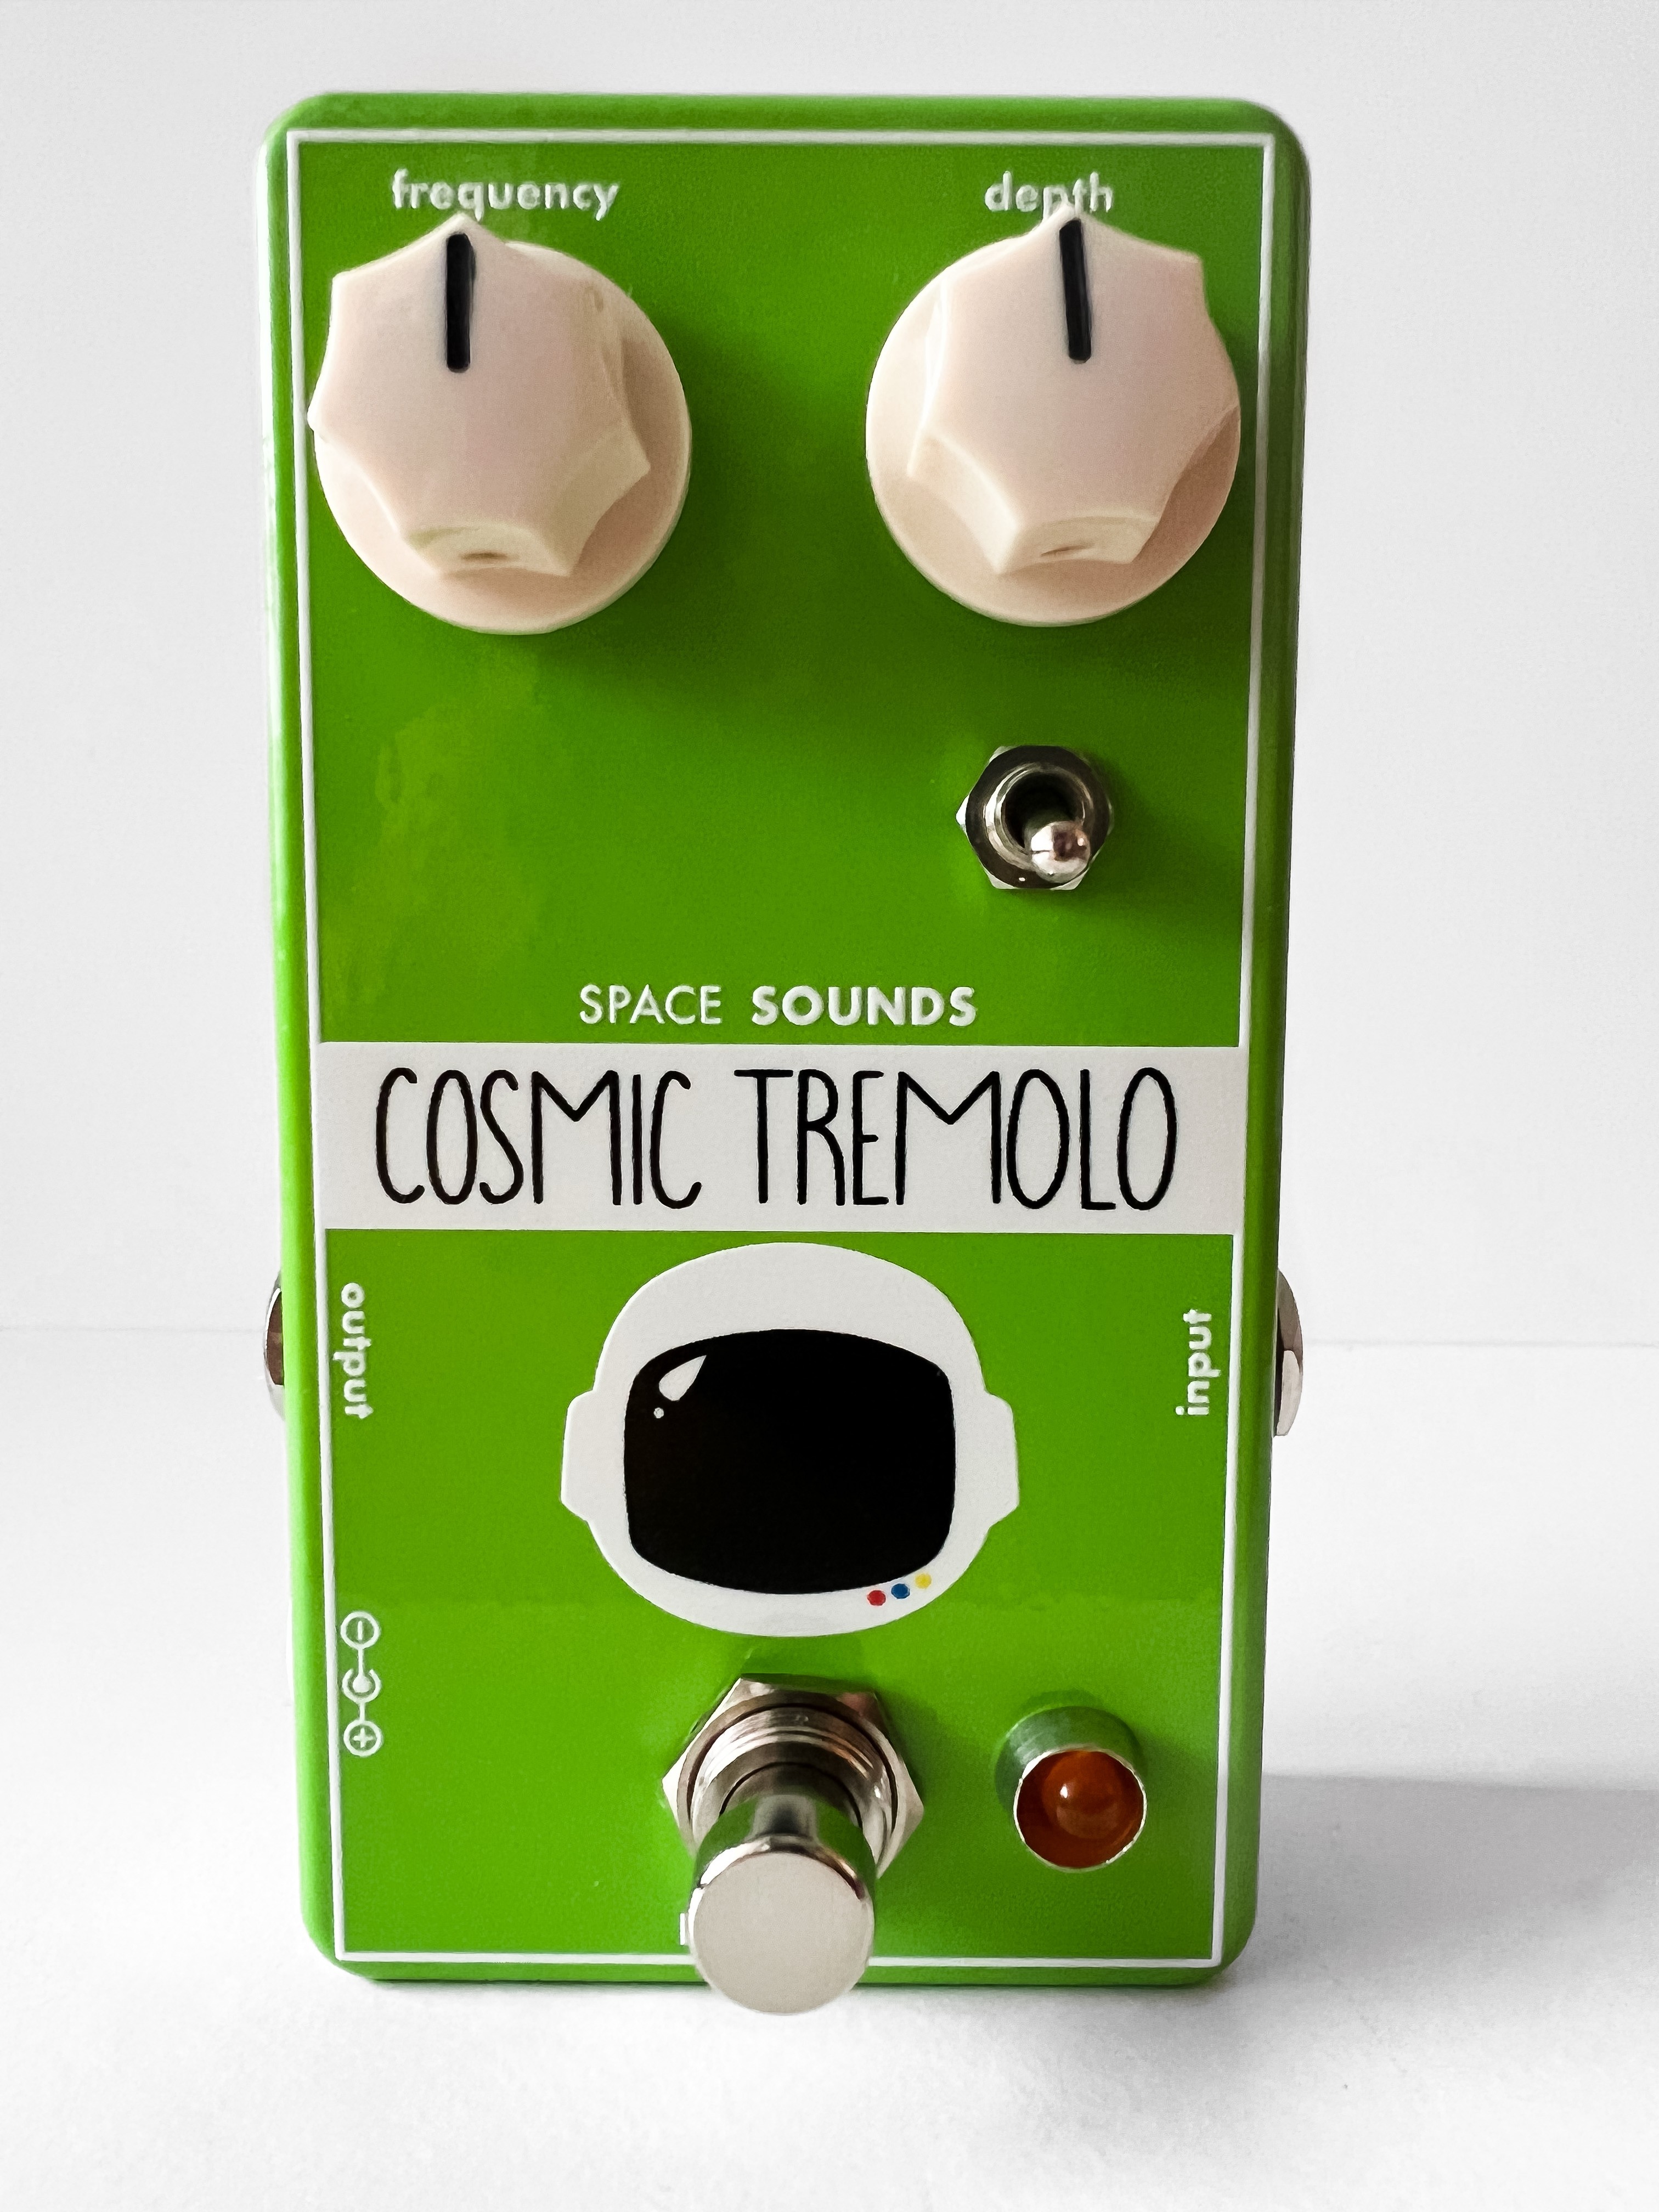 Space Sounds - Cosmic Tremolo